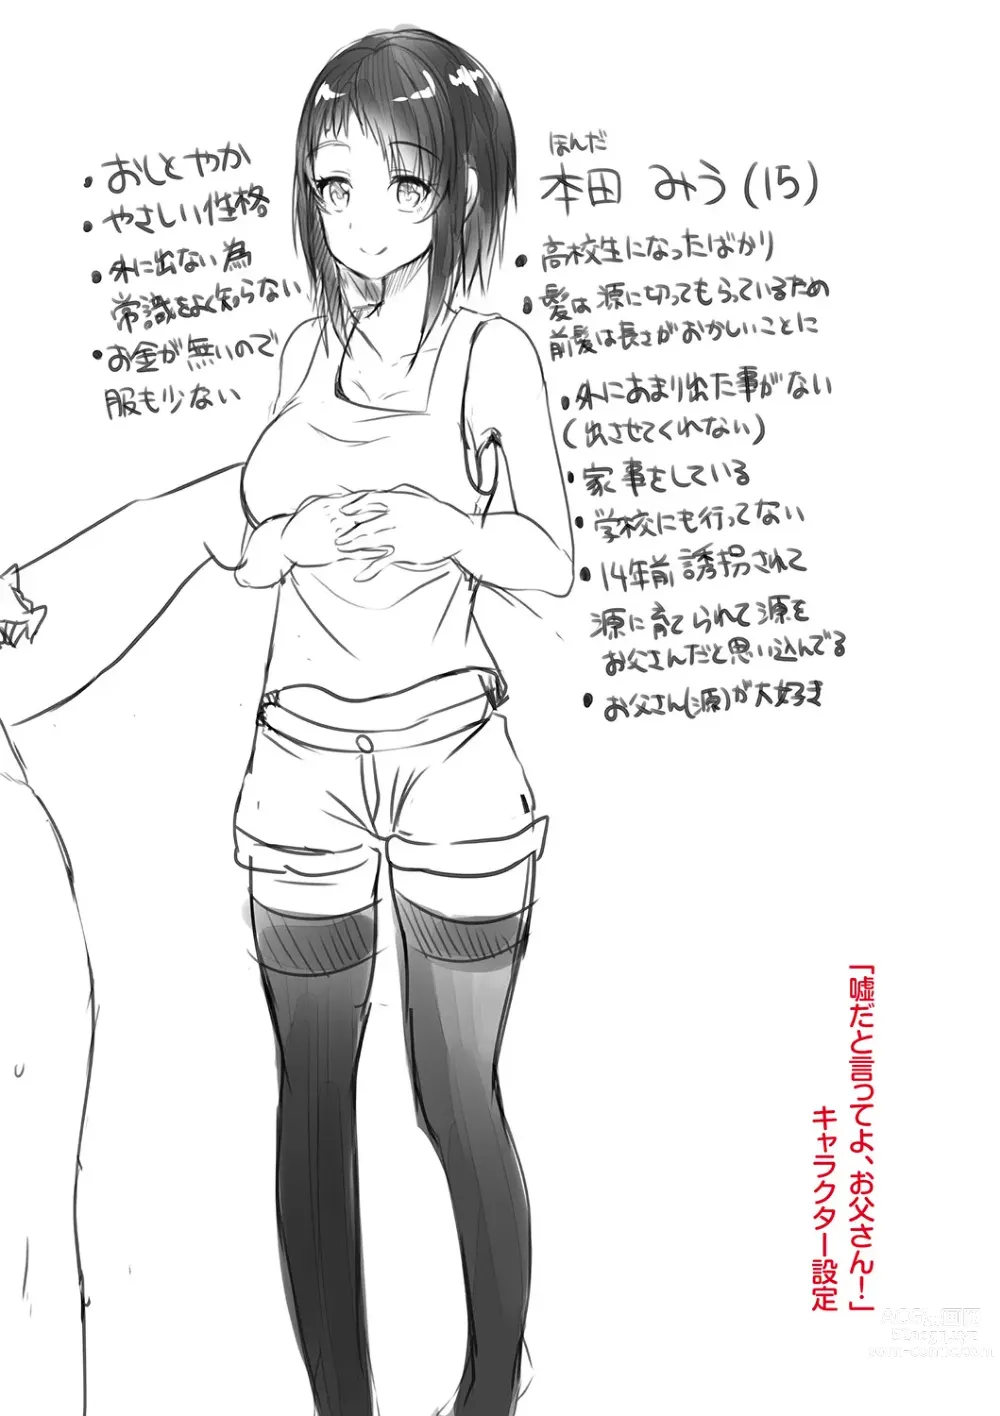 Page 218 of manga Kowashite Asobo + DLsite Gentei Chara Settei & Plot